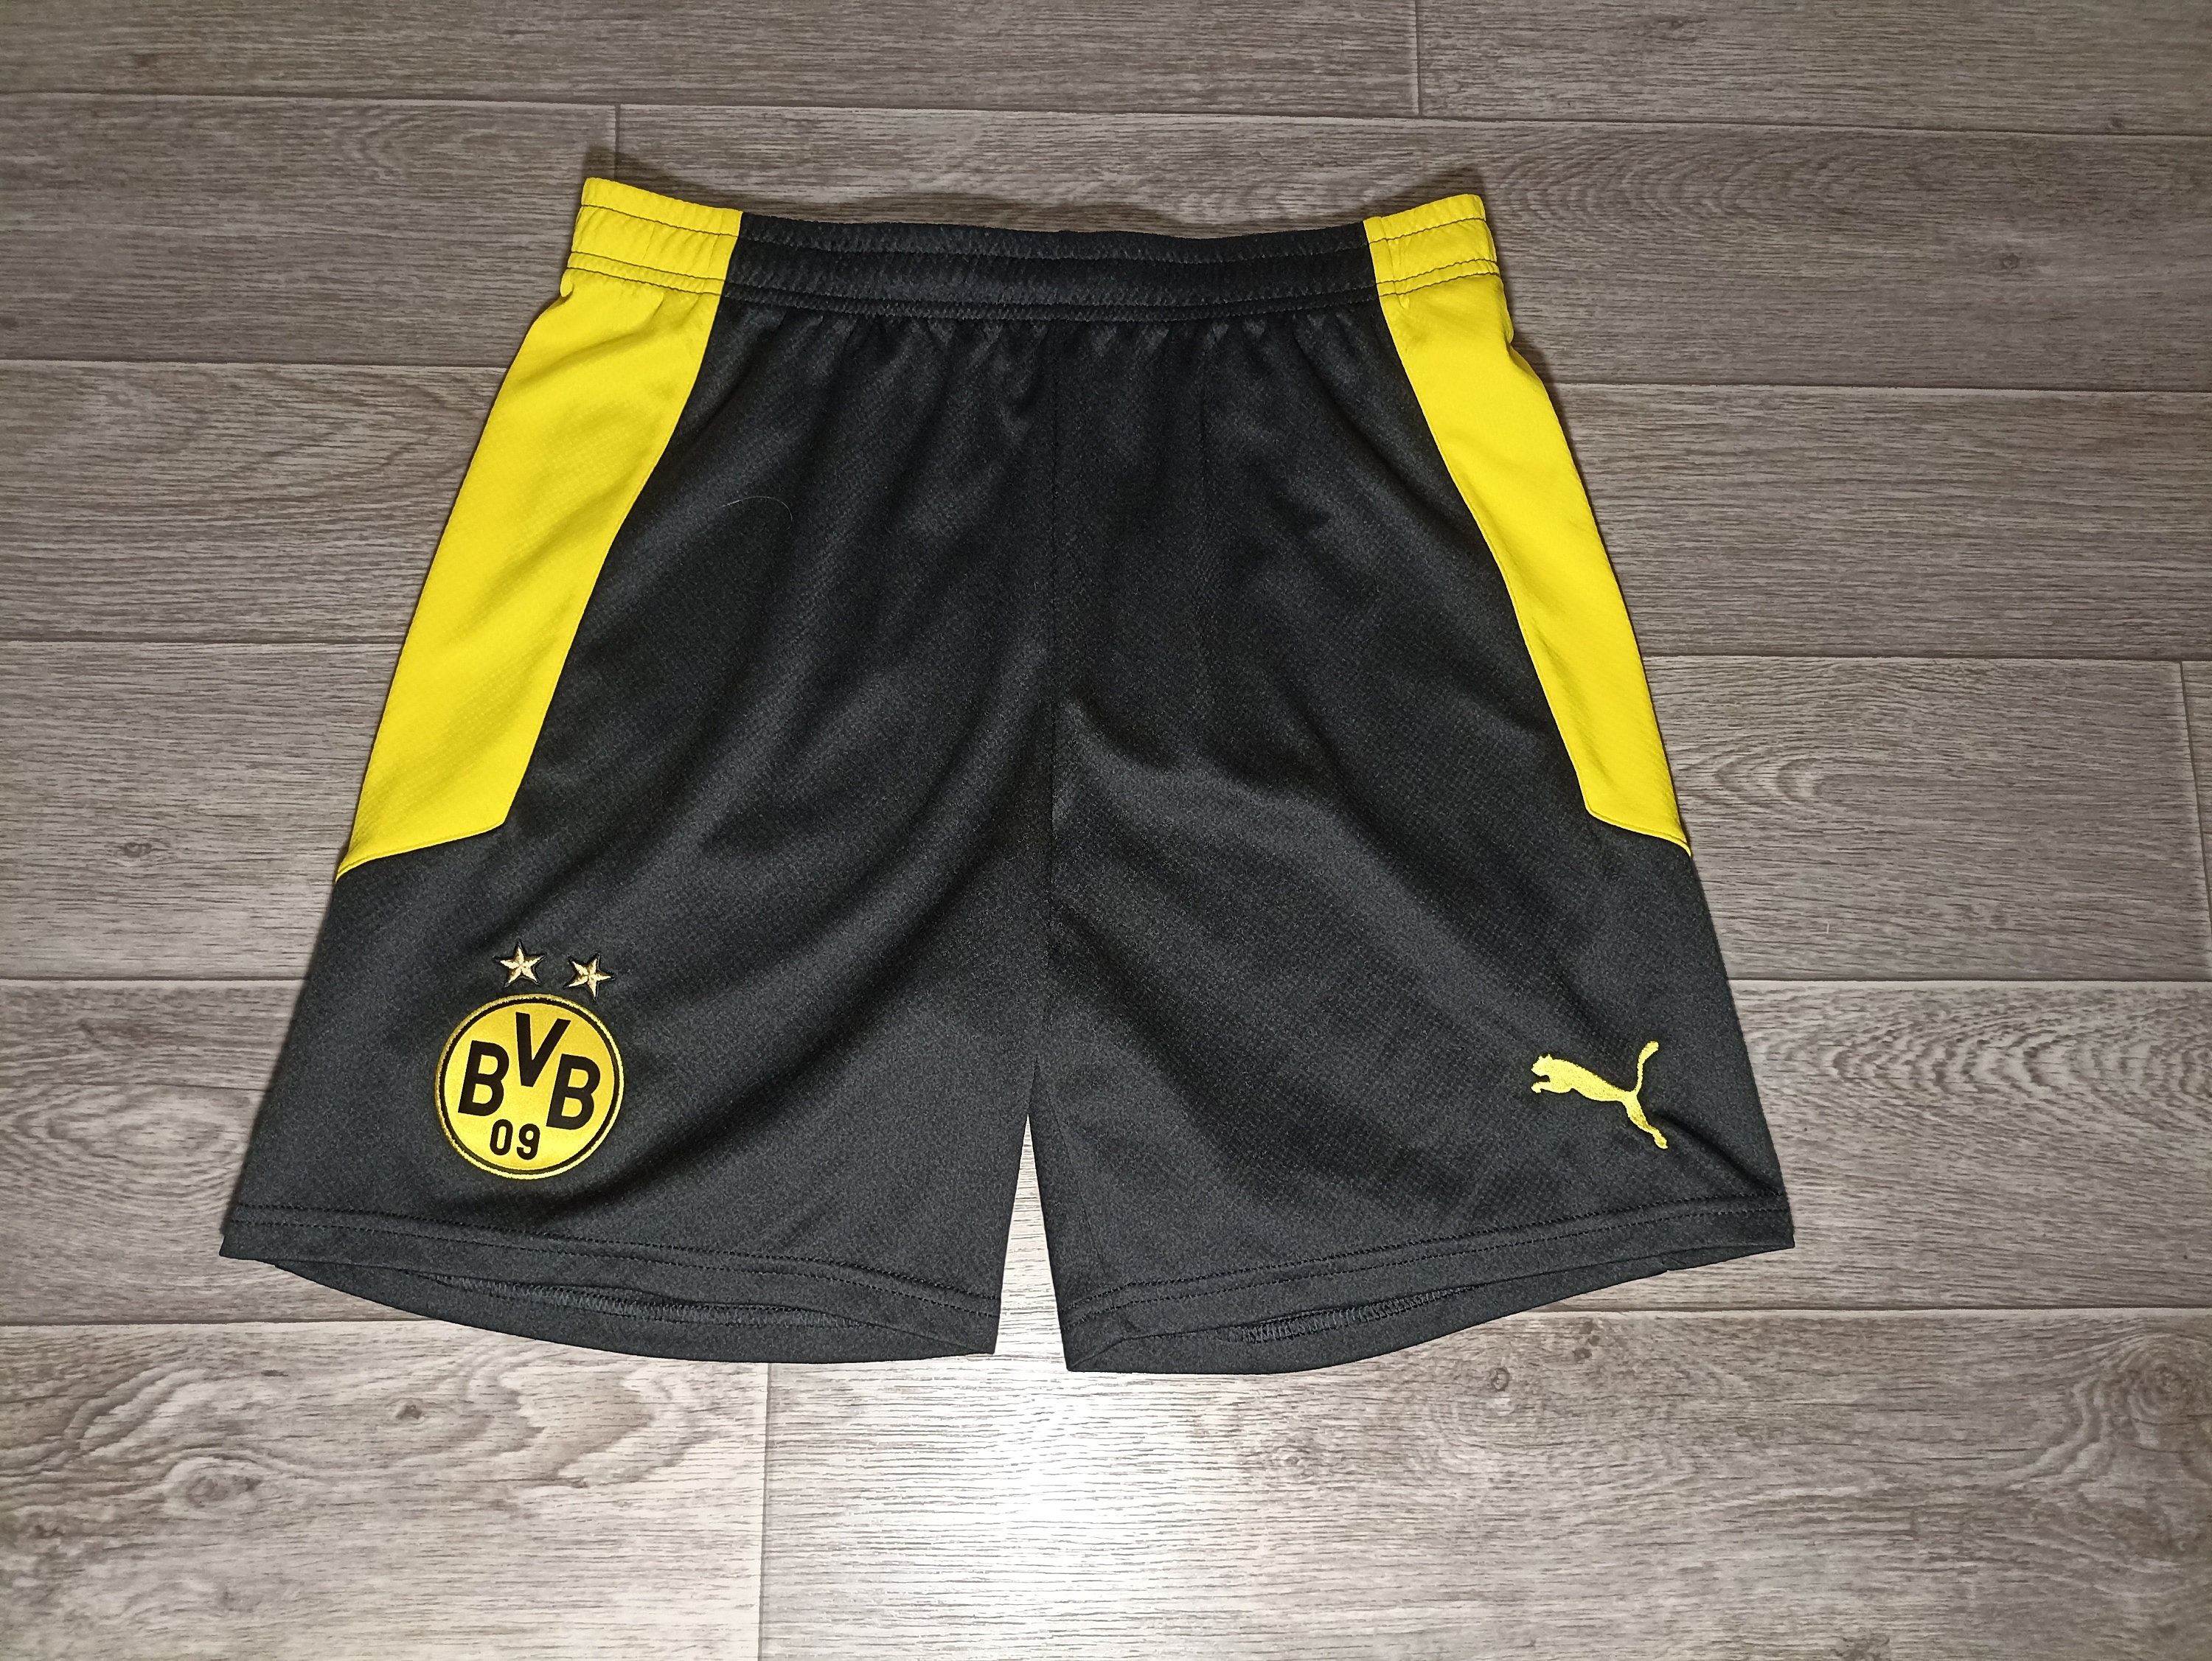 Borussia Dortmund FC BVB 09 Germany Puma 2019/20 Yellow Black Summer Thin  Men's Sports Football Soccer Uniform Shorts Jersey Knitwear Size M 